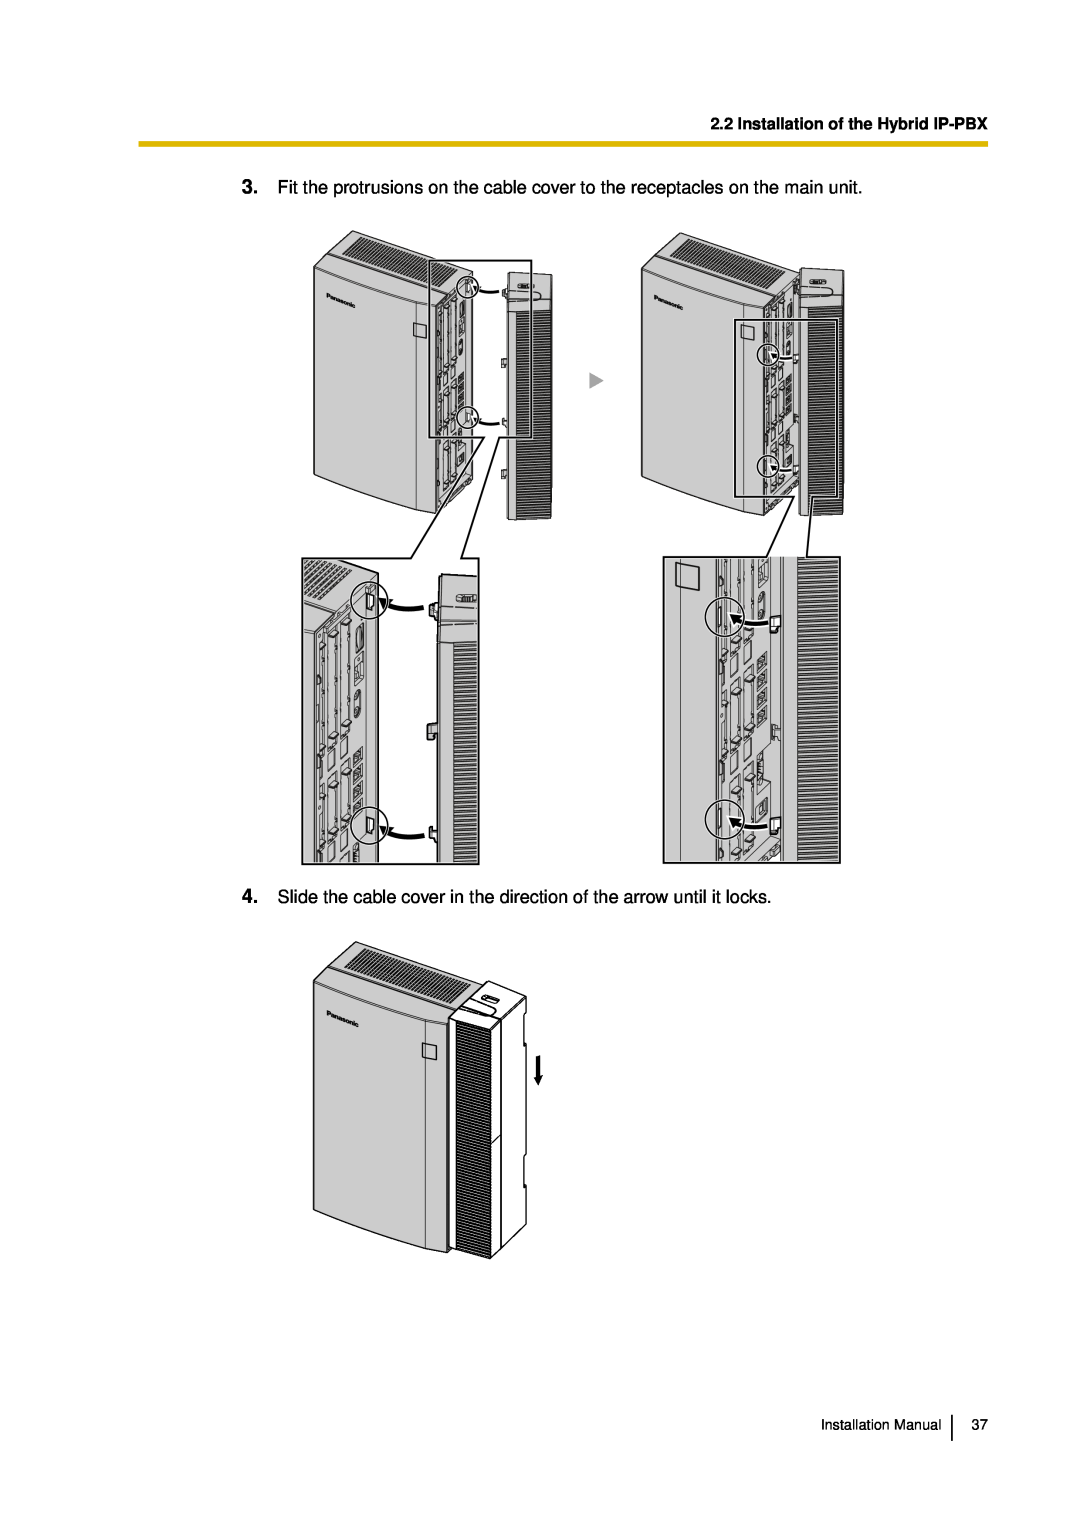 Panasonic KX-TDA30 installation manual Installation Manual 